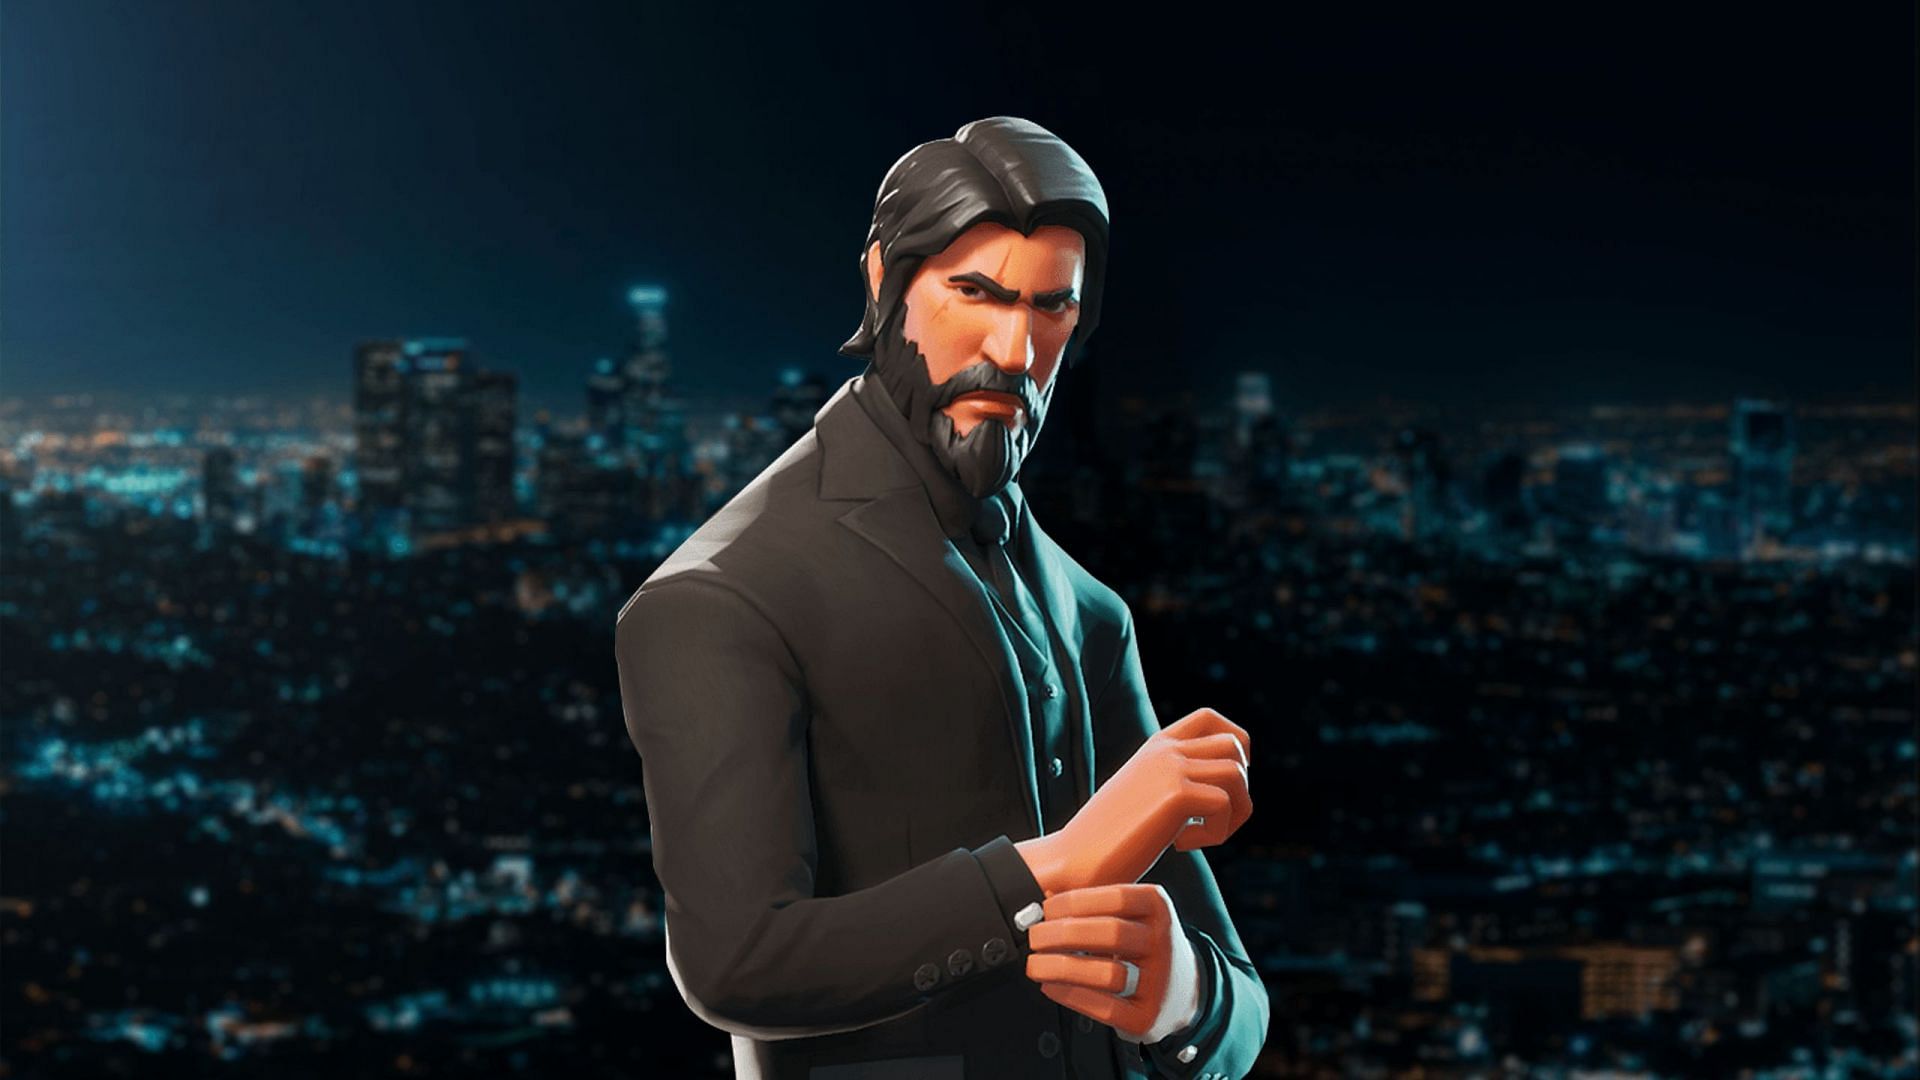 The Reaper skin from Fortnite (Image via Epic Games)